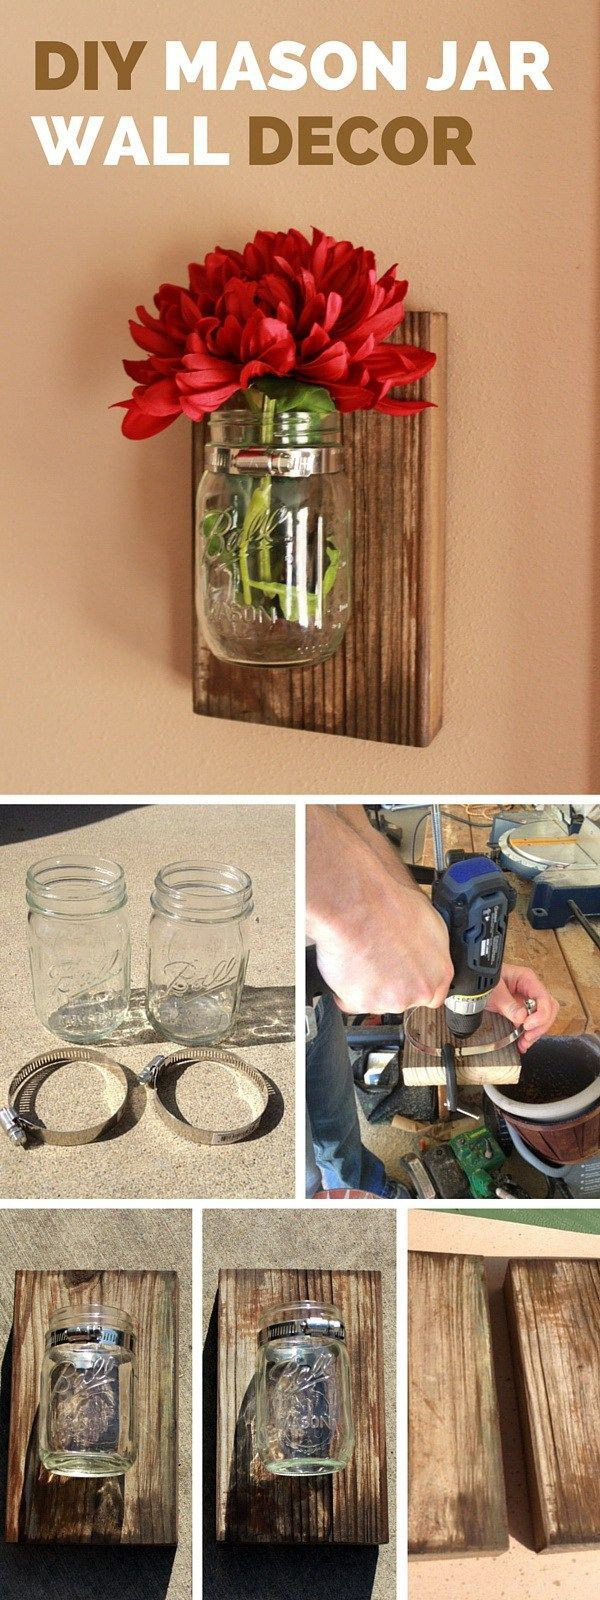 Best ideas about DIY Mason Jar Wall Decor
. Save or Pin 25 best ideas about Flower wall decor on Pinterest Now.